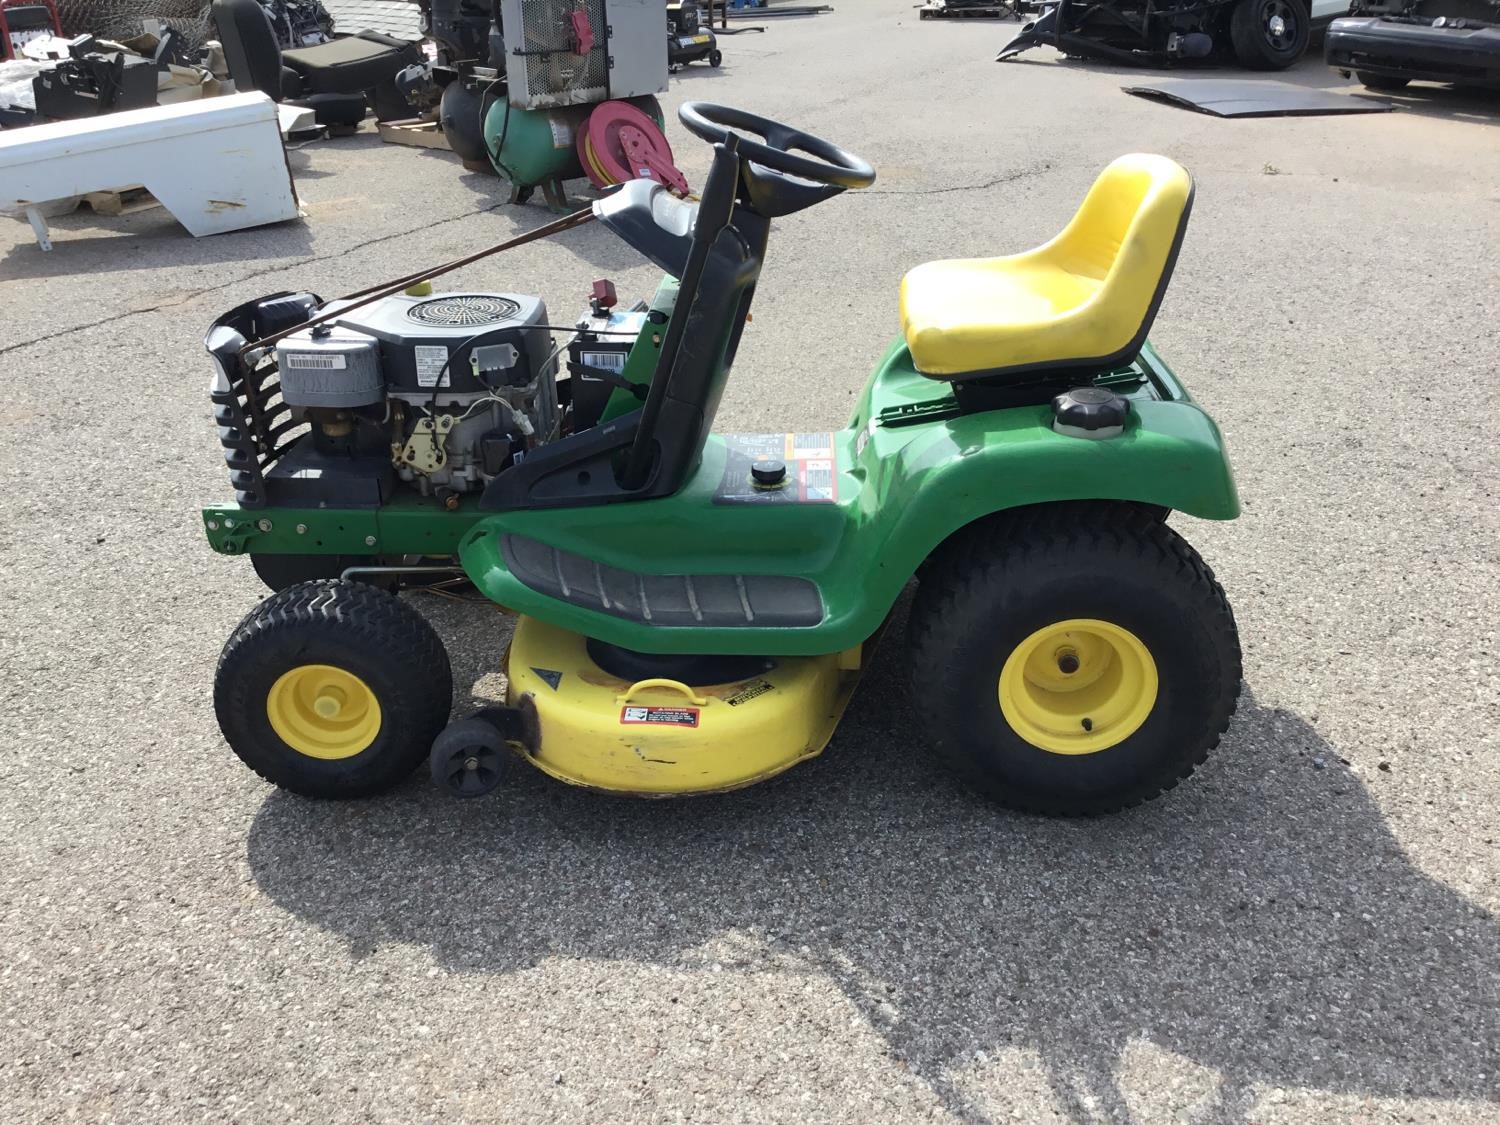 2001 John Deere Lt155 Lawn Tractor Bigiron Auctions 5391